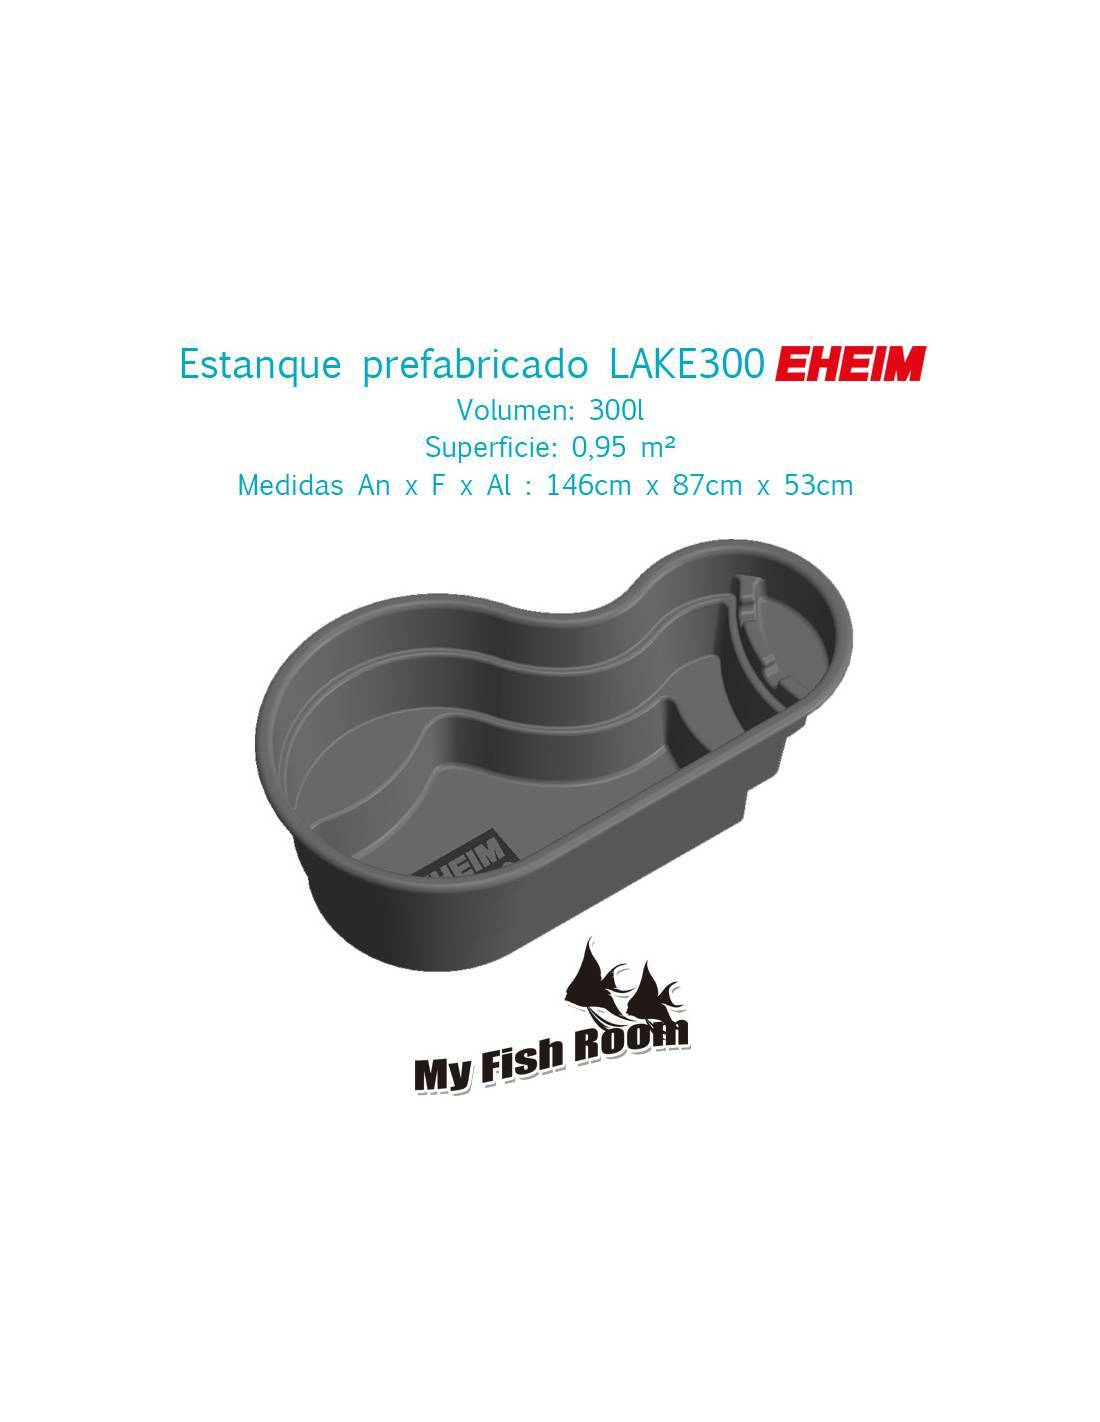 Estanque prefabricado 300 litros forma orgánica - EHEIM LAKE300